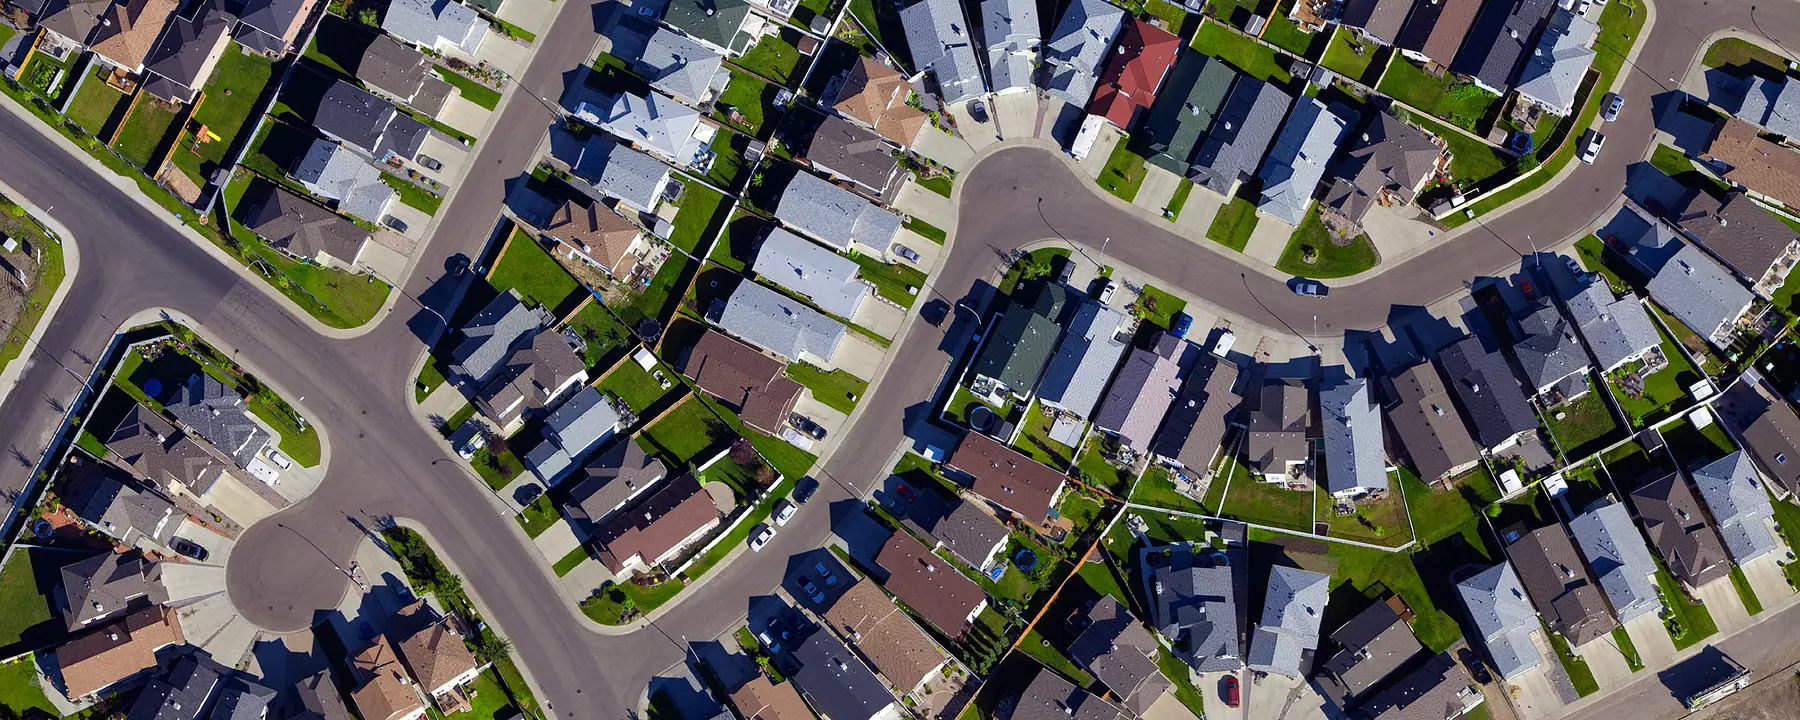 Aerial photograph of neighborhood